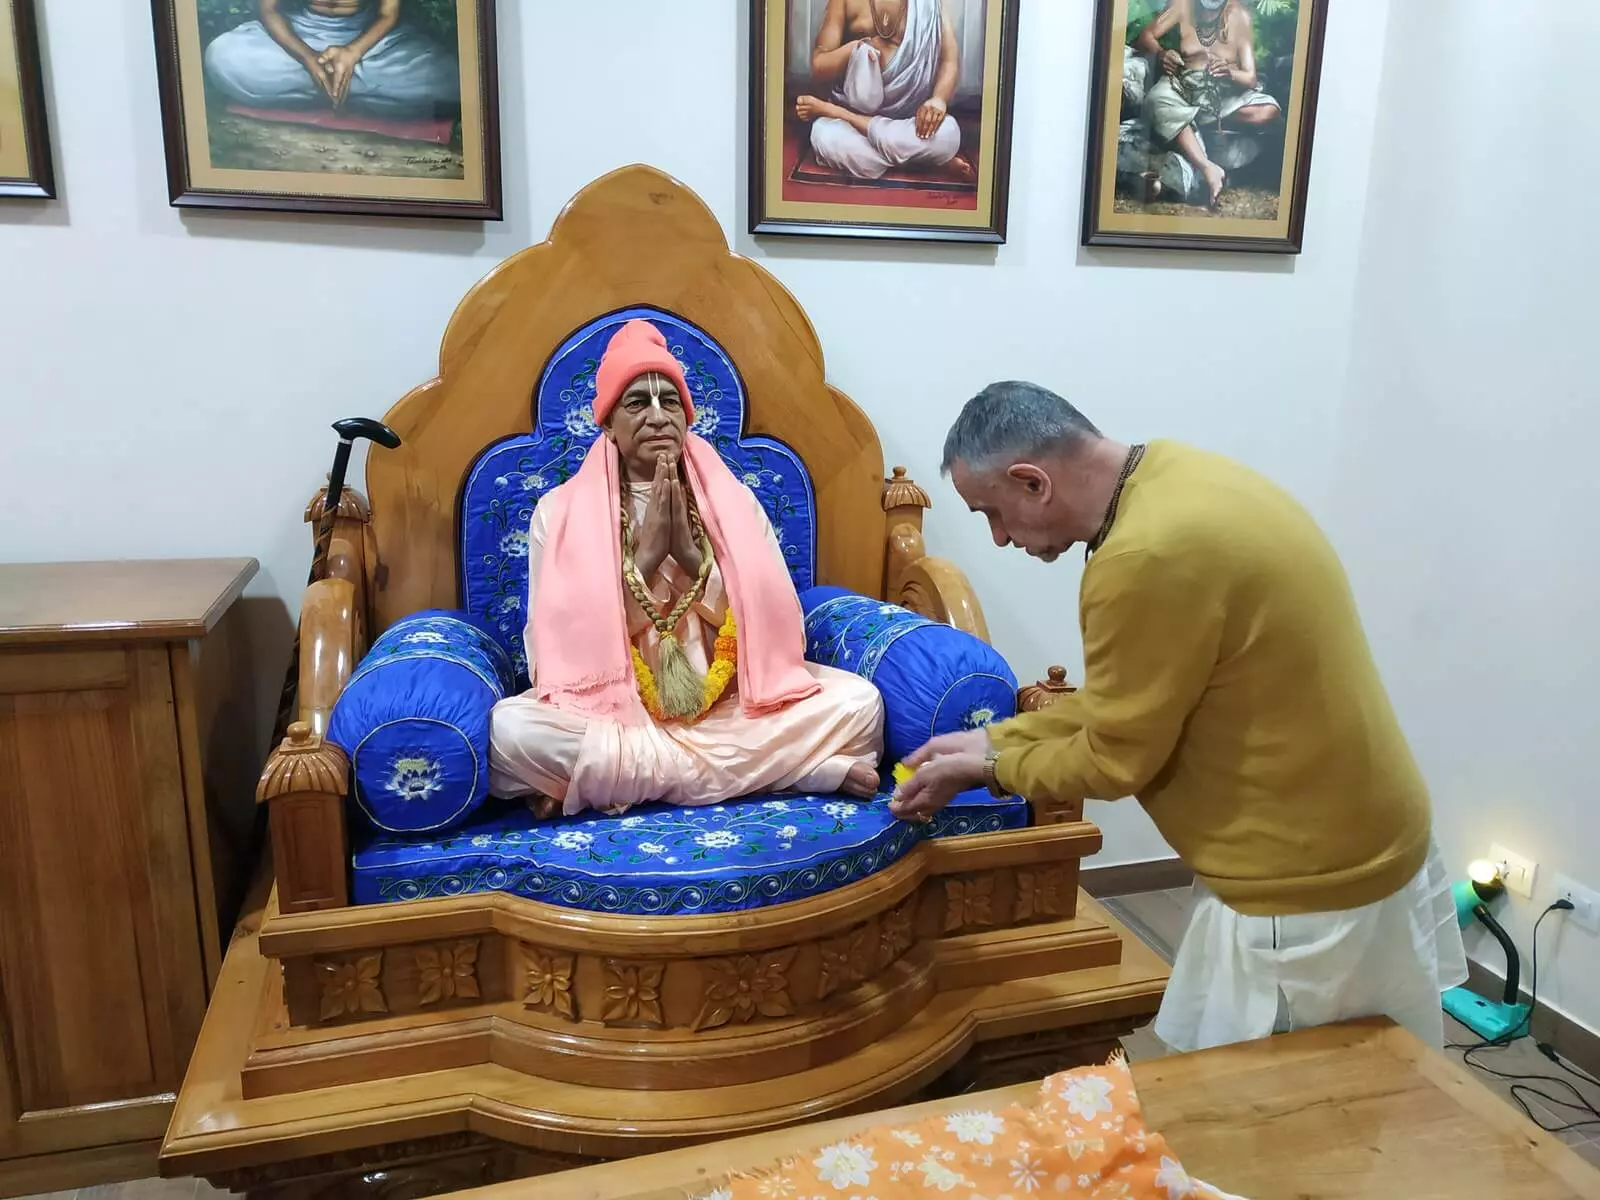 Mon retour au TOVP - Sadbhuj prabhu se prosternant devant le nouveau murti de Srila Prabhupada'